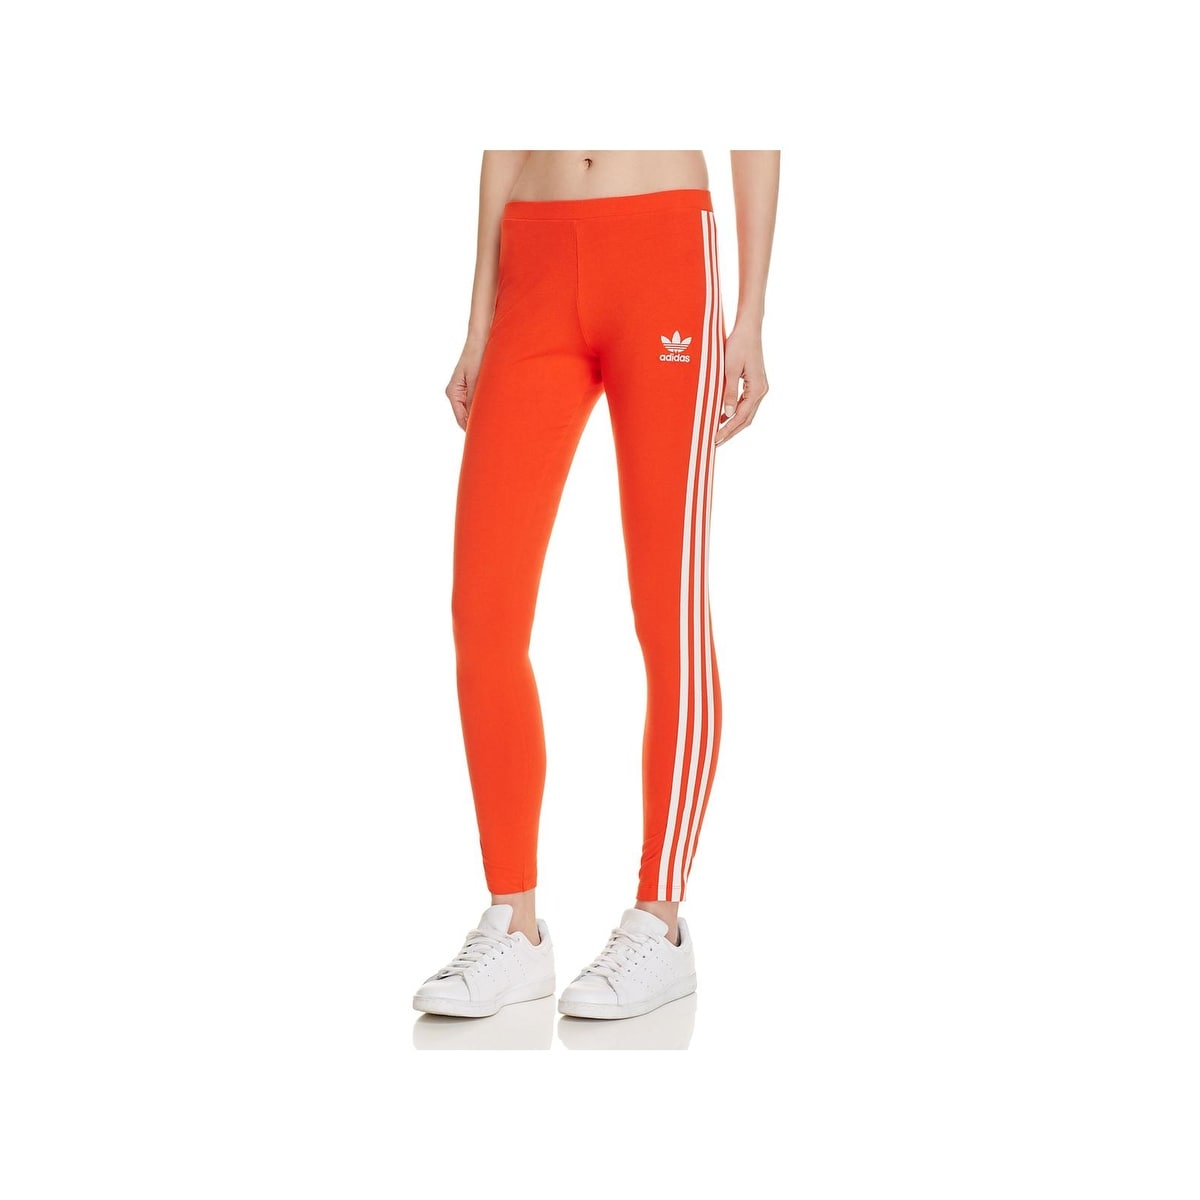 adidas orange tights